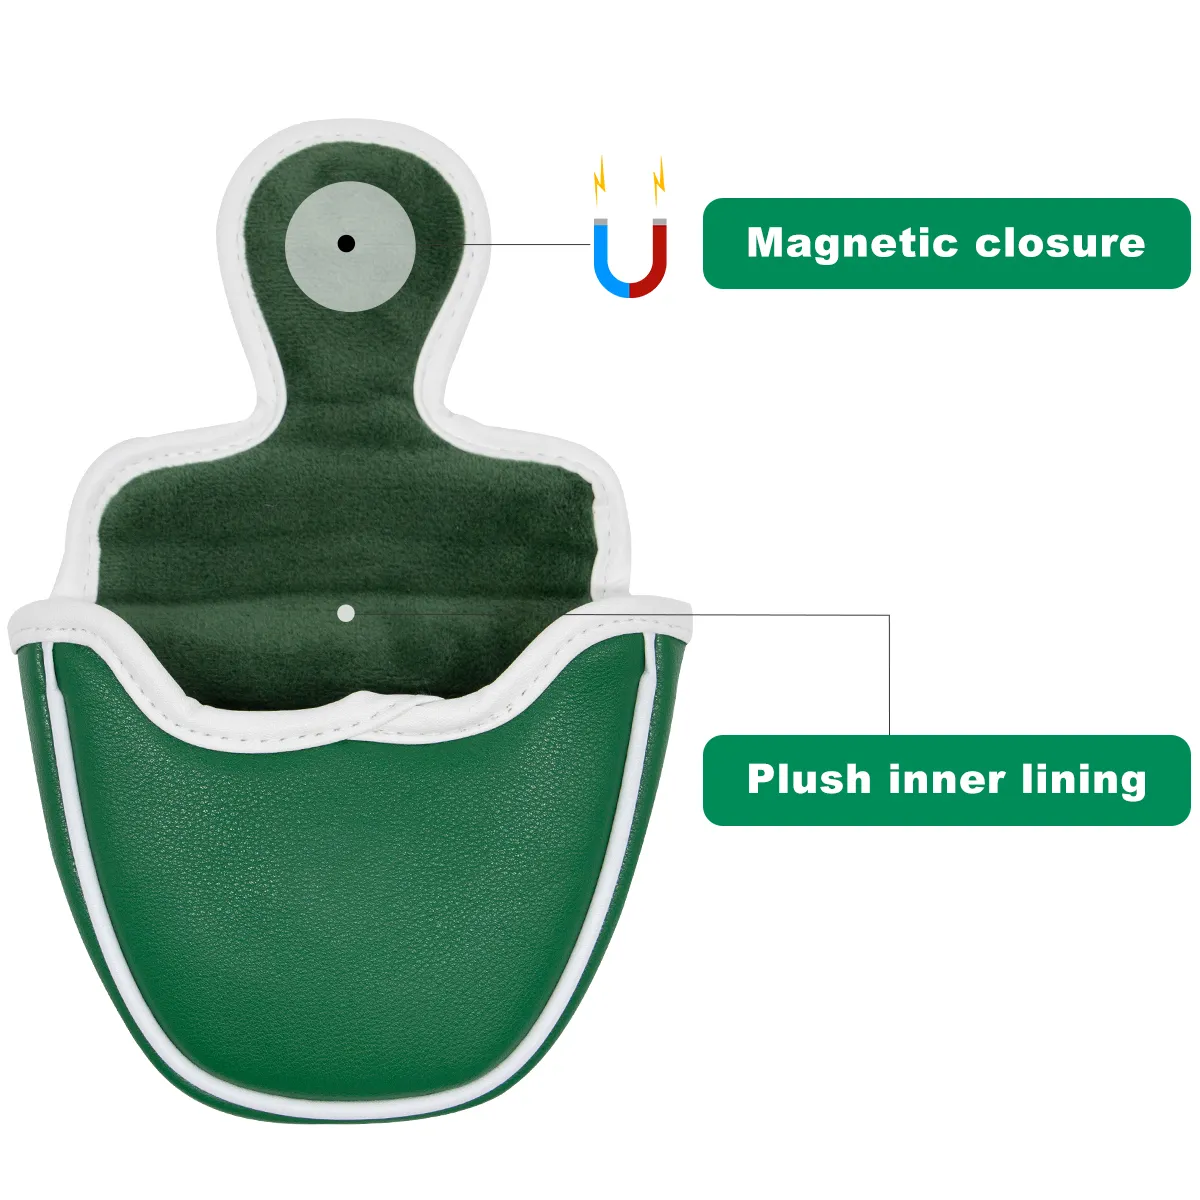 Cubierta de Putter de chaqueta verde a prueba de manchas de agua, fundas de cabeza para Club de Golf, mazo de cuero PU, accesorios magnéticos 4269001